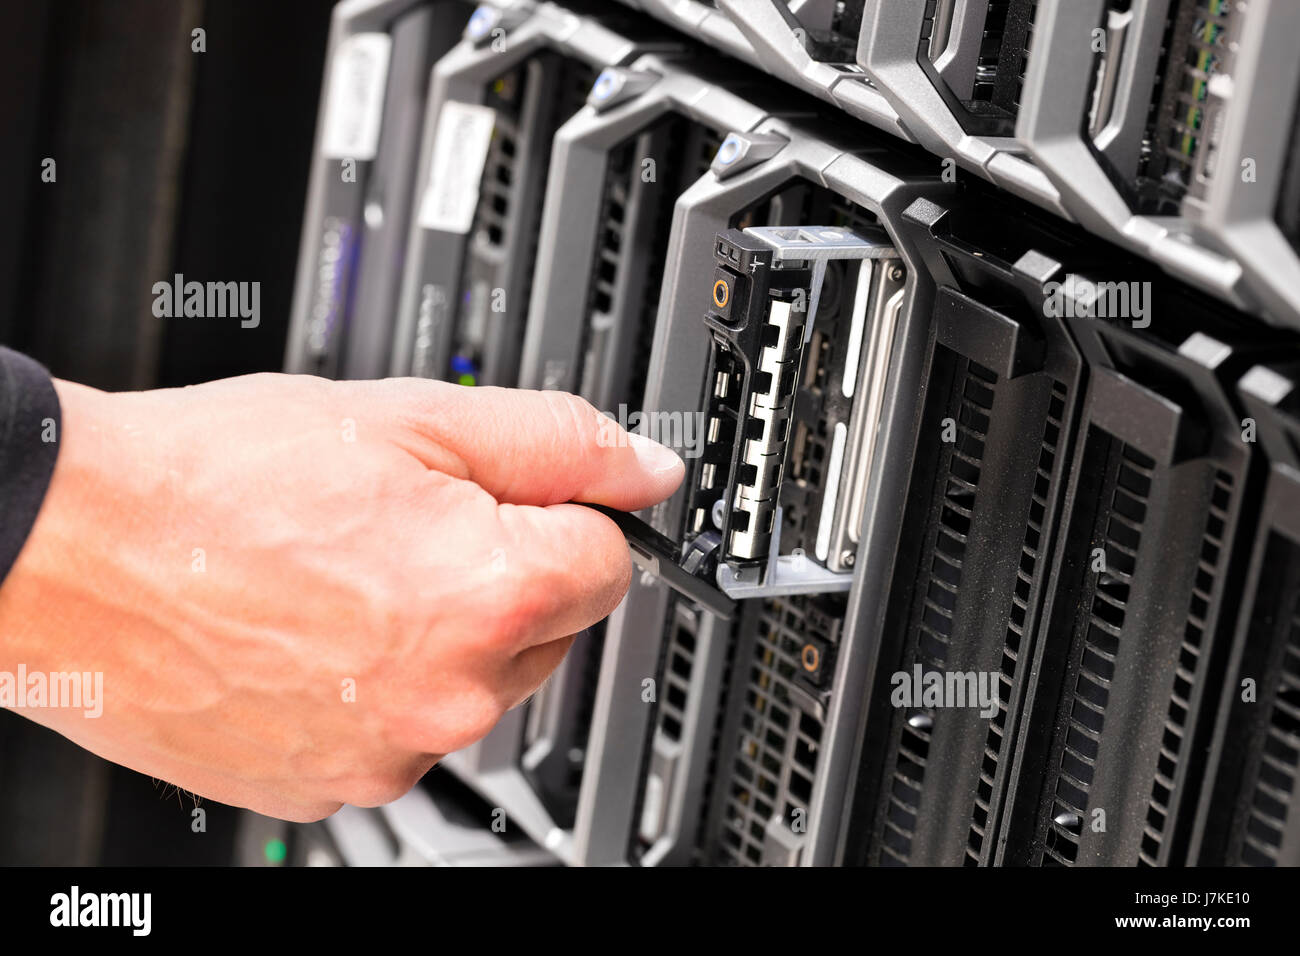 IT Technicians Repairing Harddrive on Server At Data Center Stock Photo